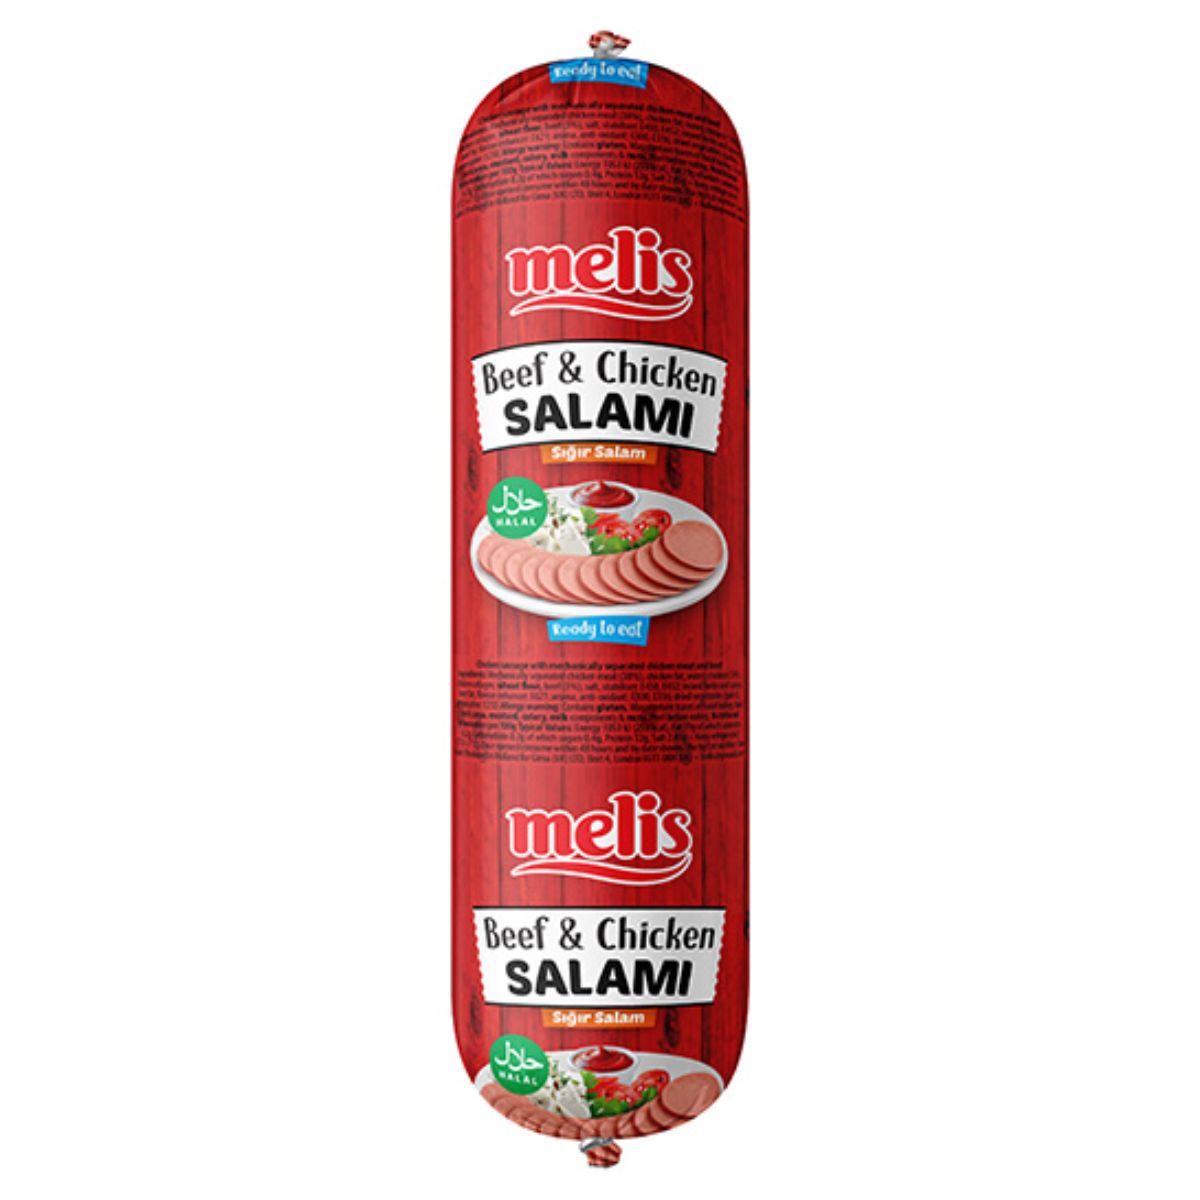 Melis - Beef & Chicken Salami (Halal) - 500g